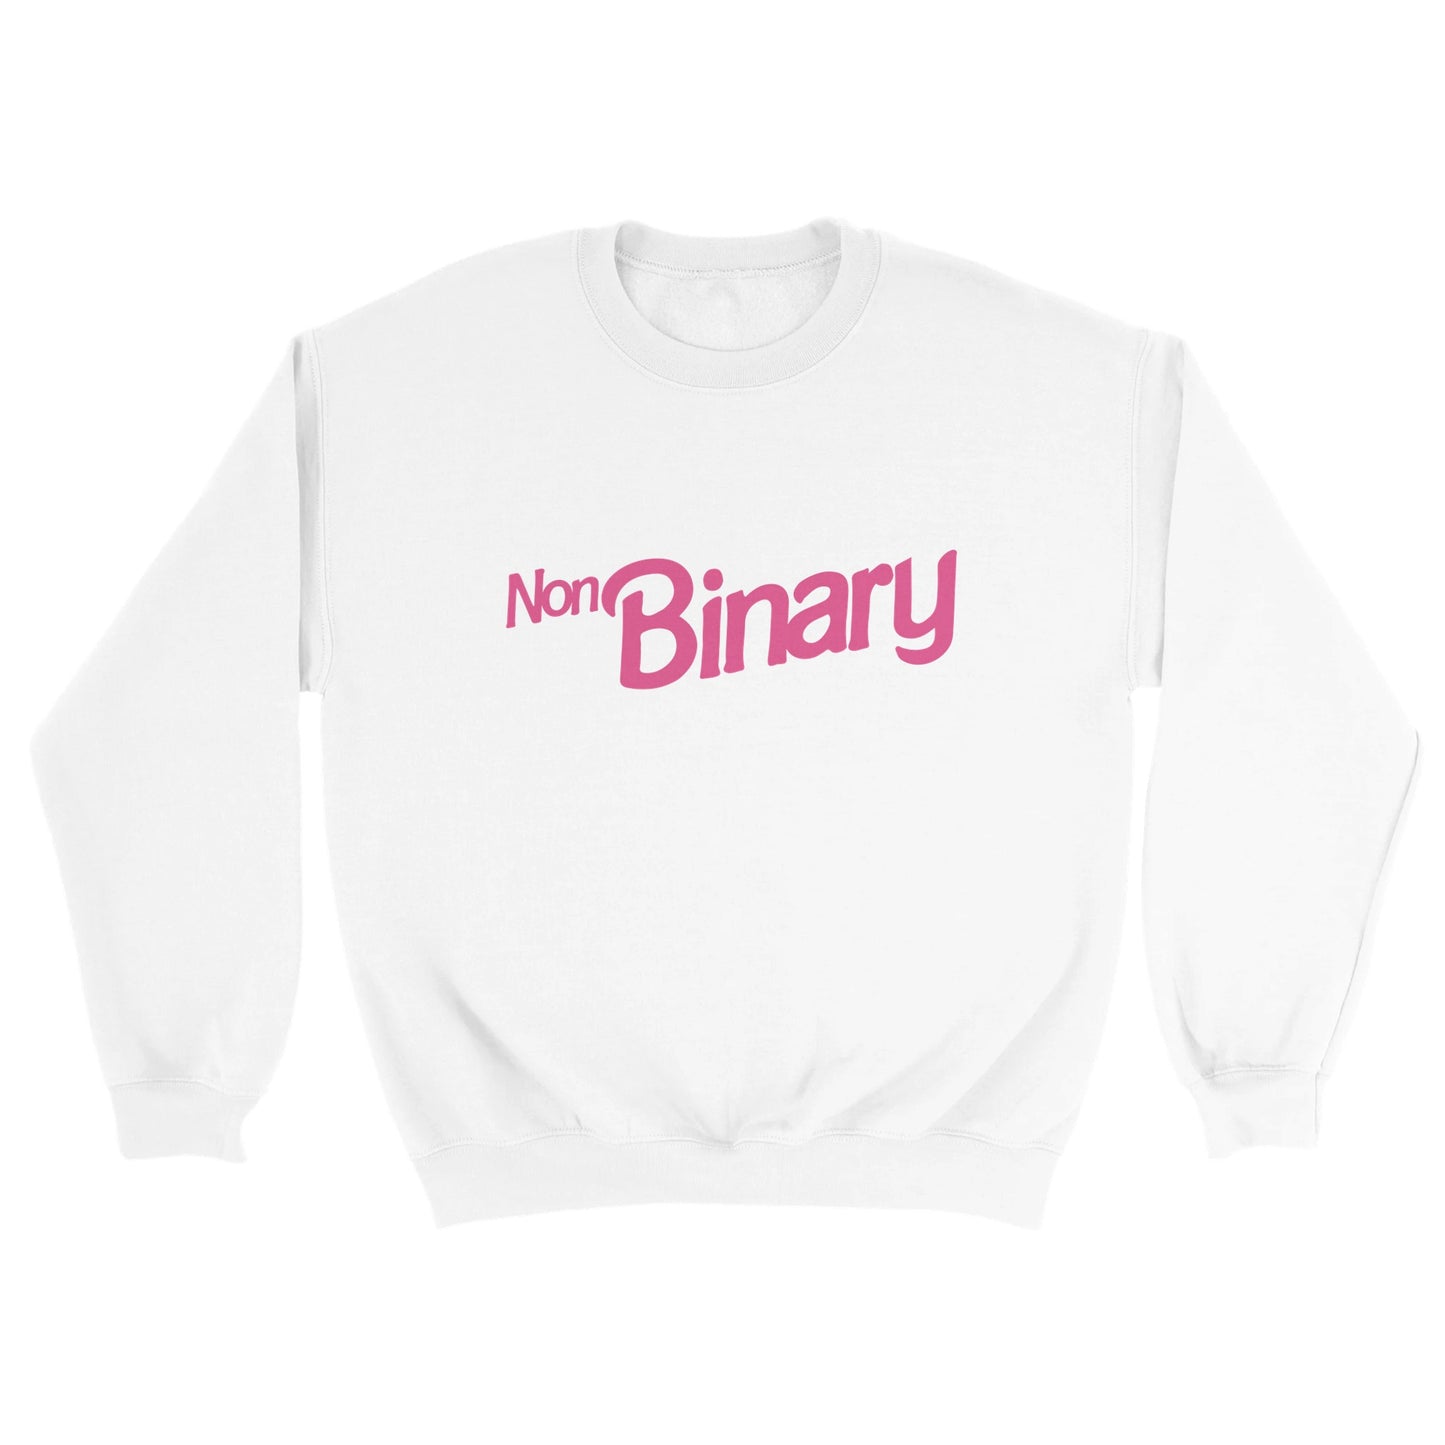 Non Binary Unisex Sweatshirt